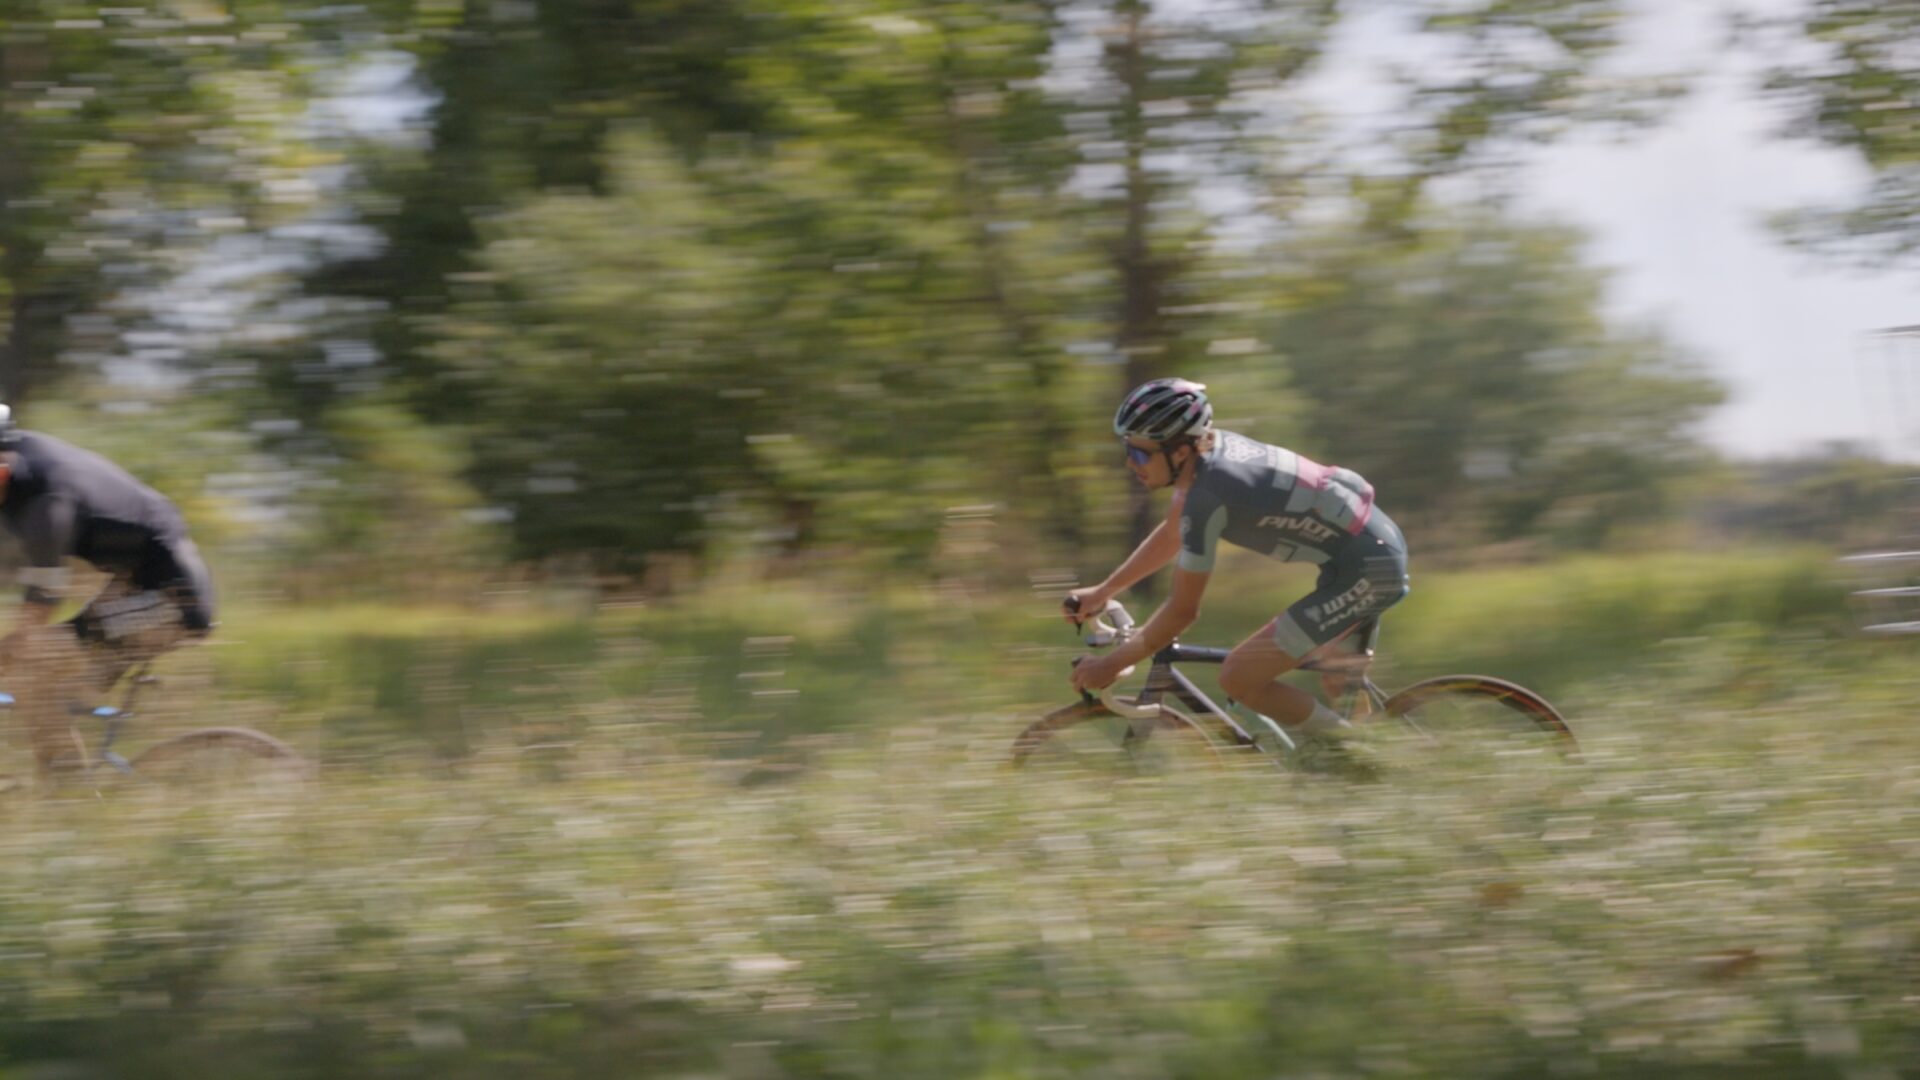 A cyclocross rider rounds a bend through tall grass.